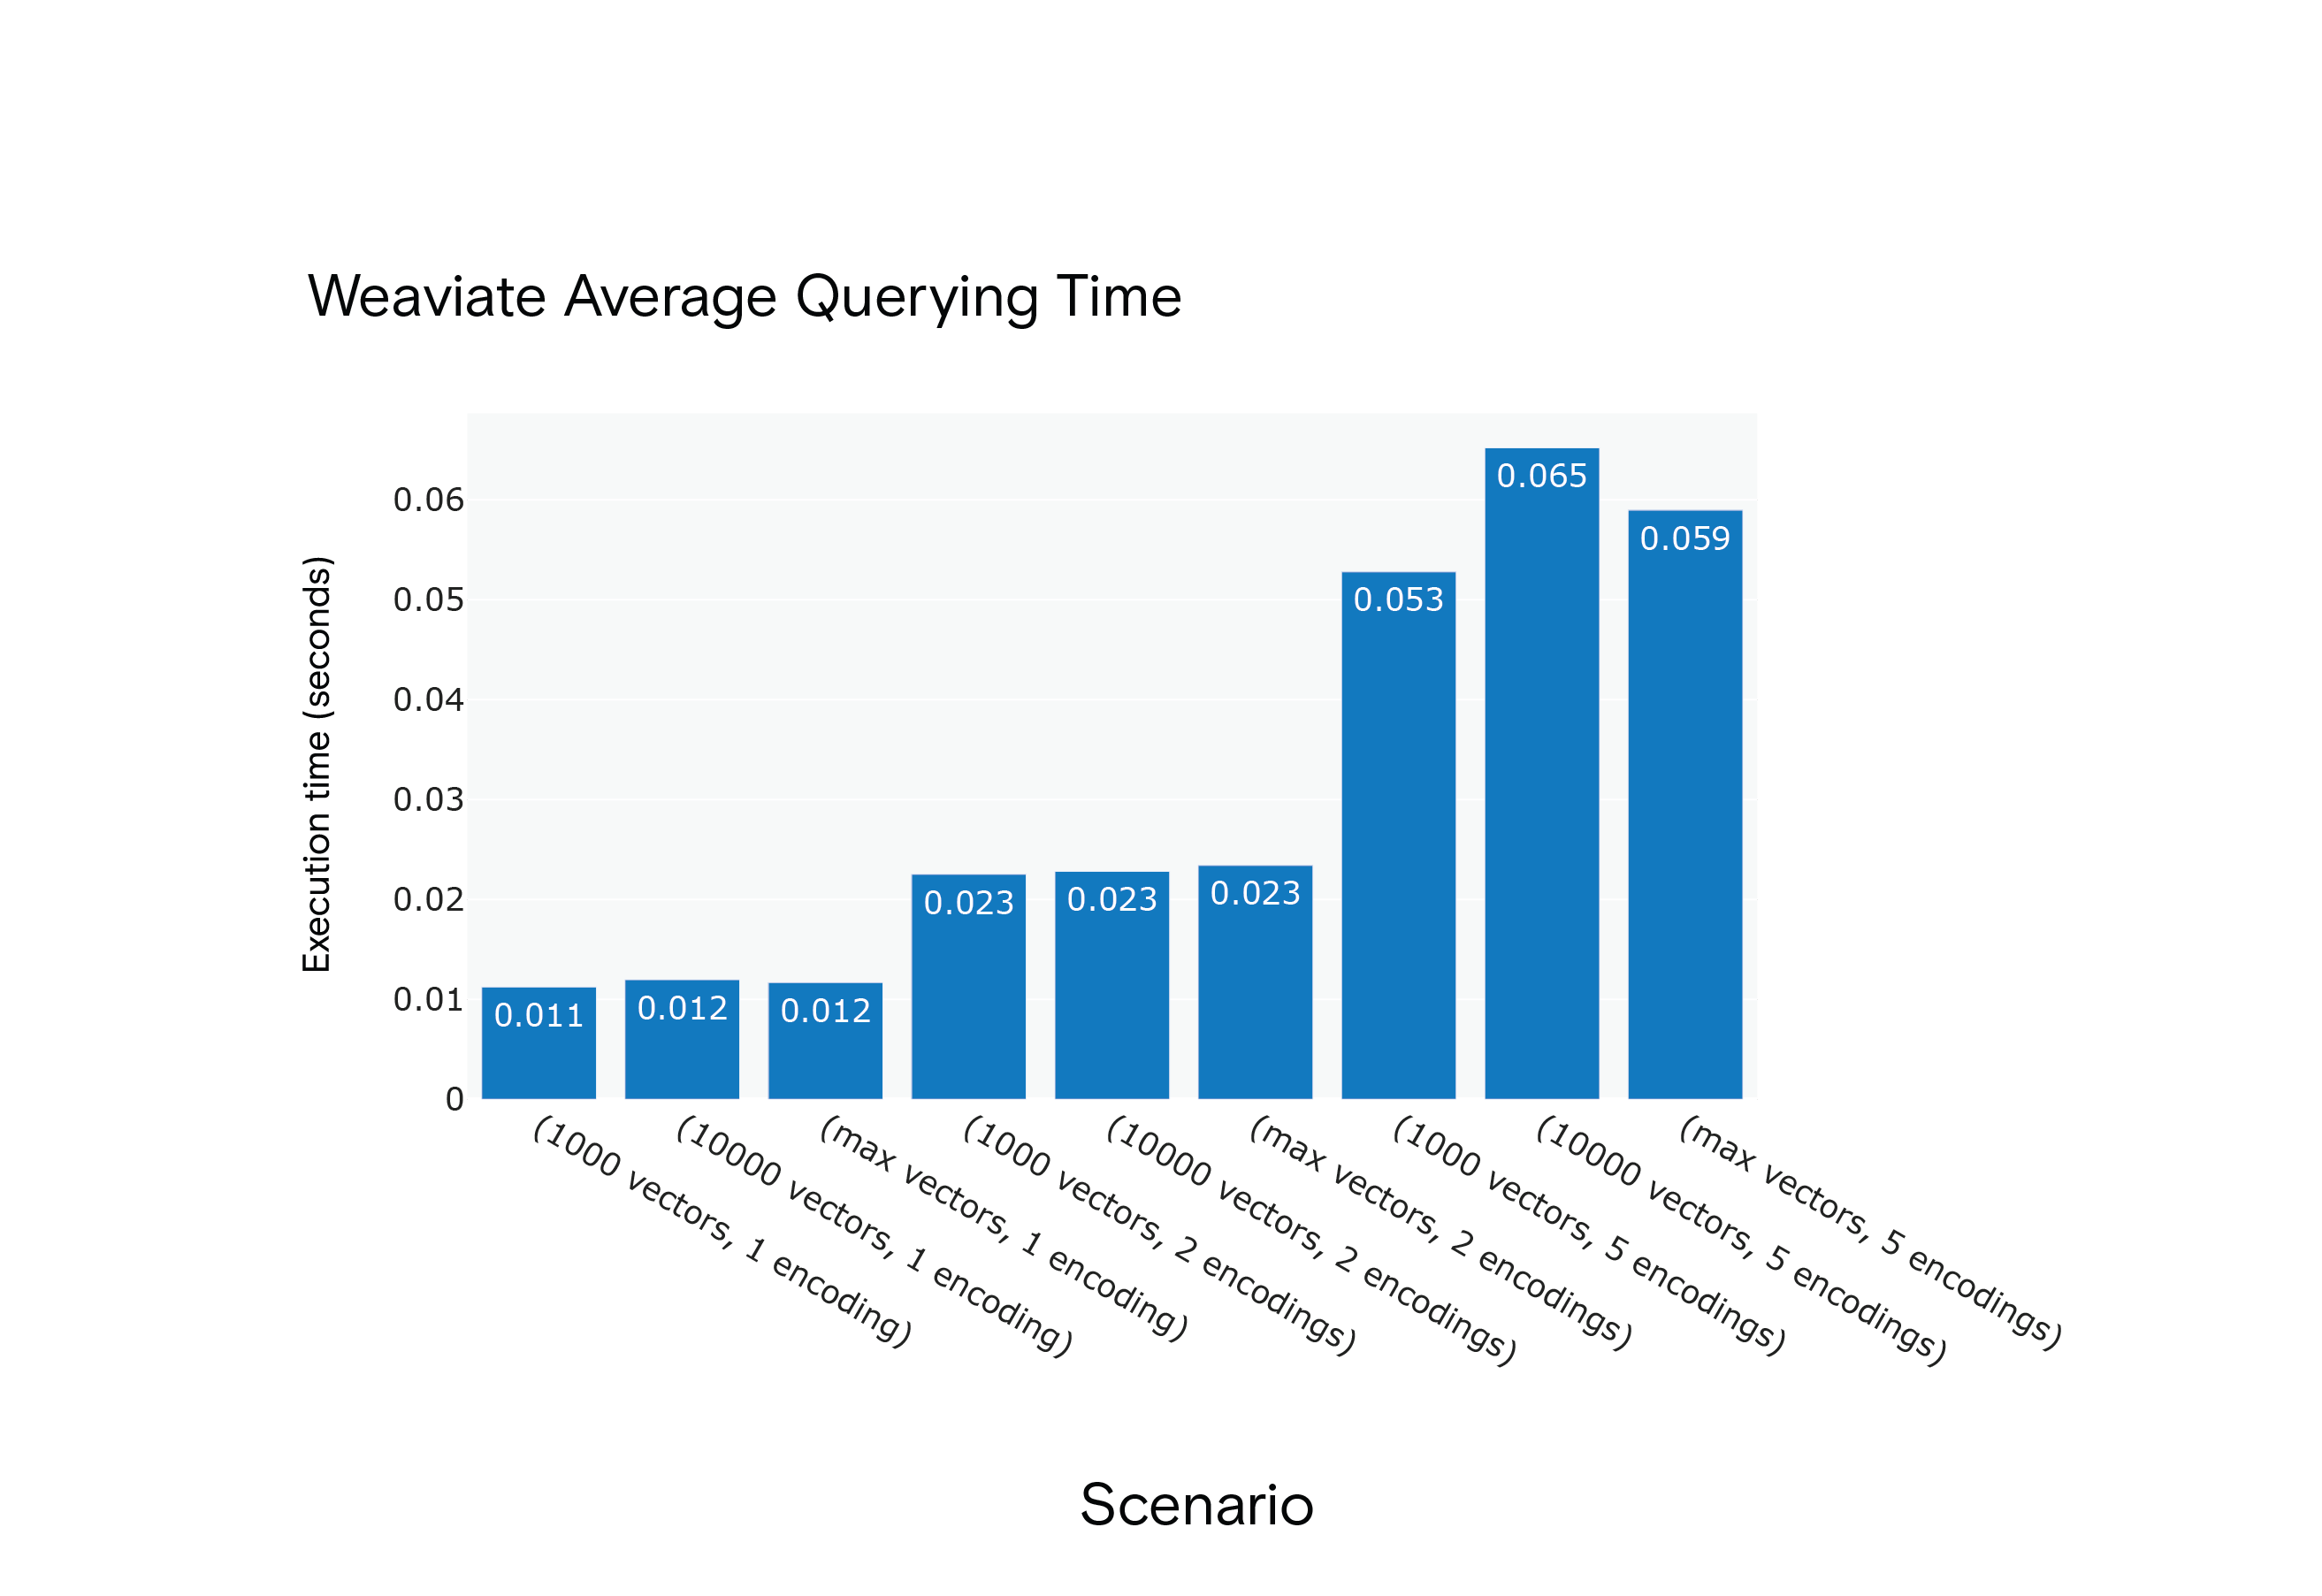 Weaviate Average Querying Time for Scenarios S1 through S9